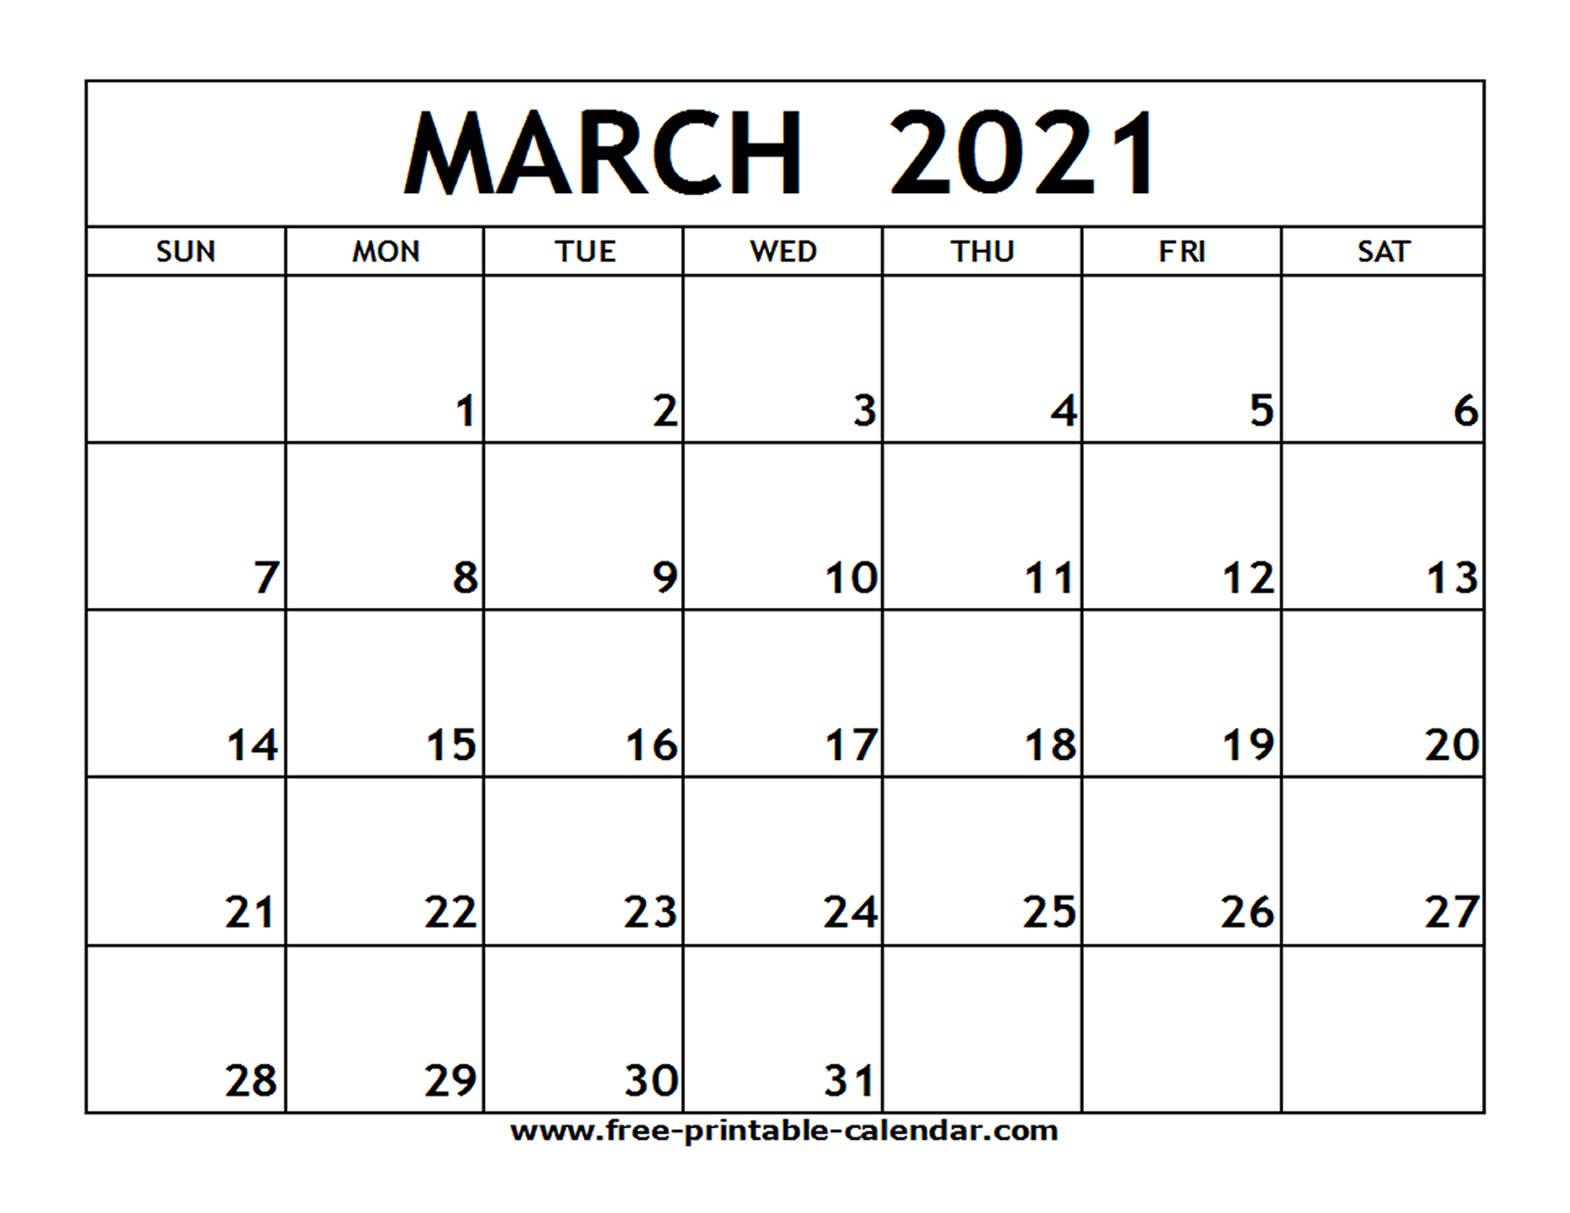 March 2021 Printable Calendar - Free-Printable-Calendar